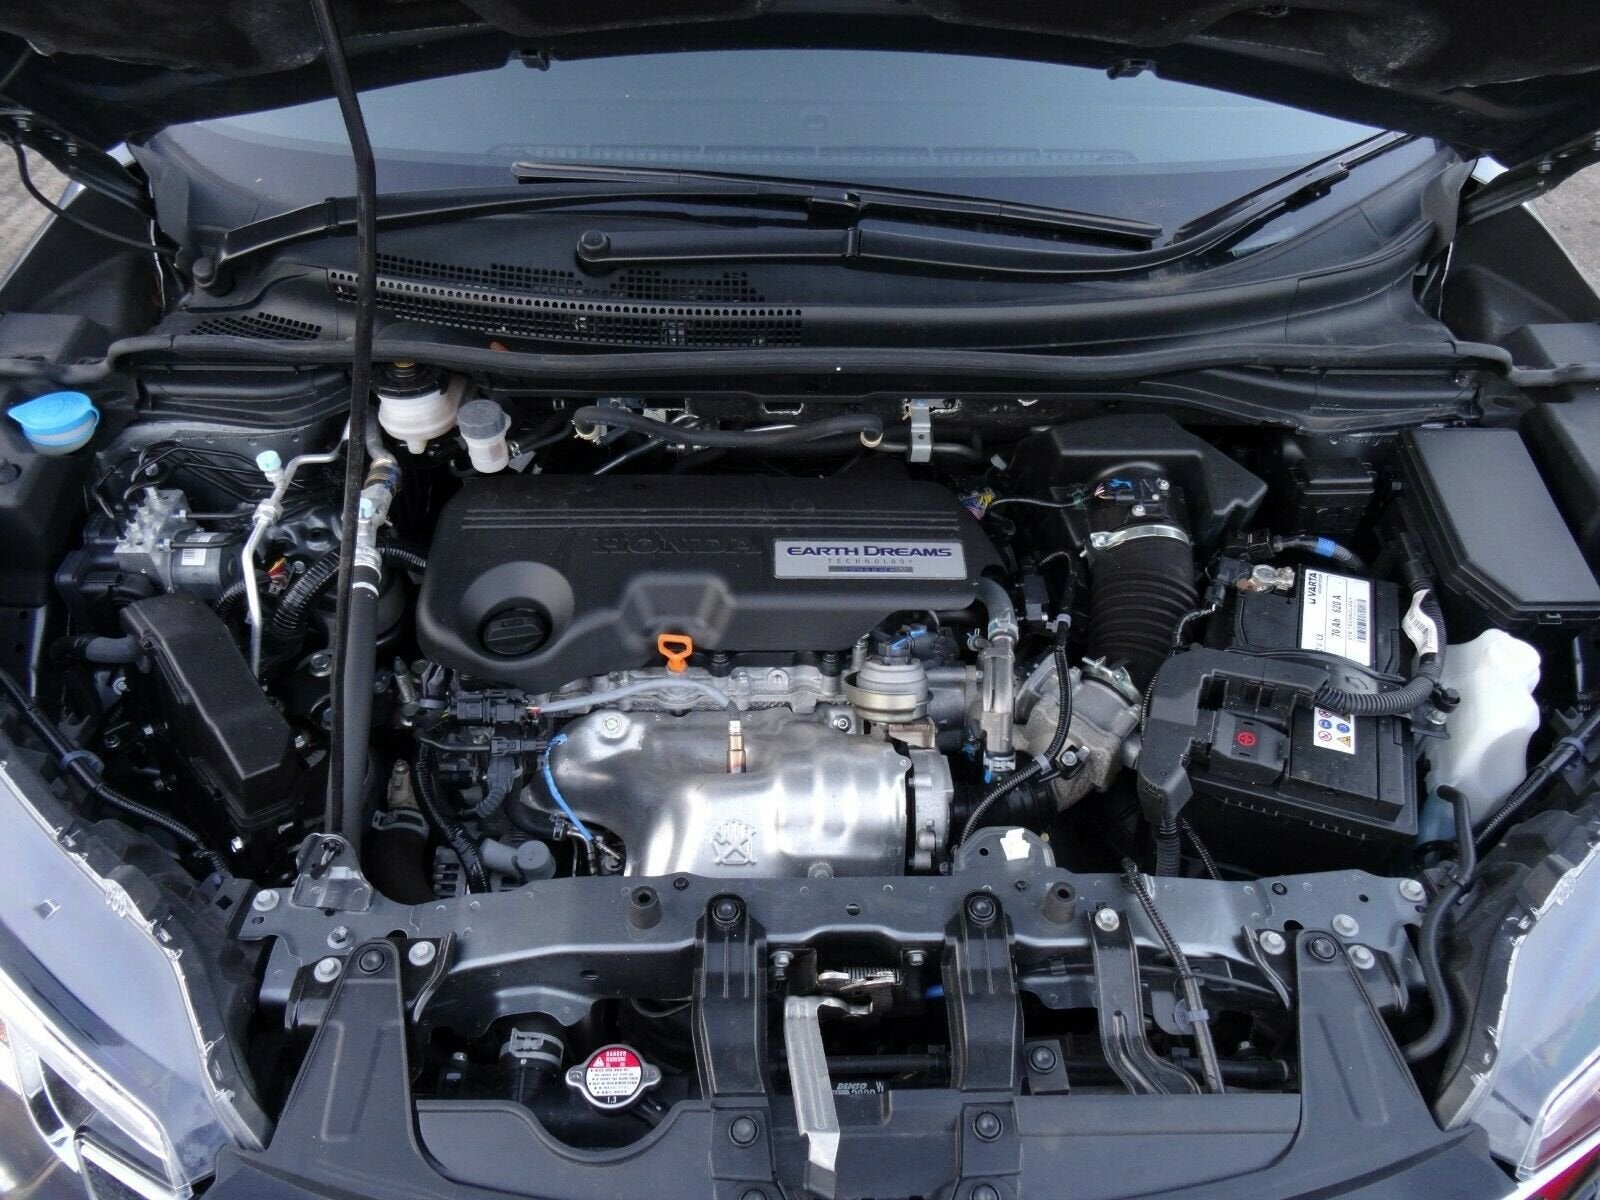 Двигатели хонда срв 2 поколения. Мотор Honda CR-V 2.0 2013. Хонда CRV 2014 С мотором 2.4. Хонда СРВ 2 двигатель. Honda CRV 2010 двигатель.